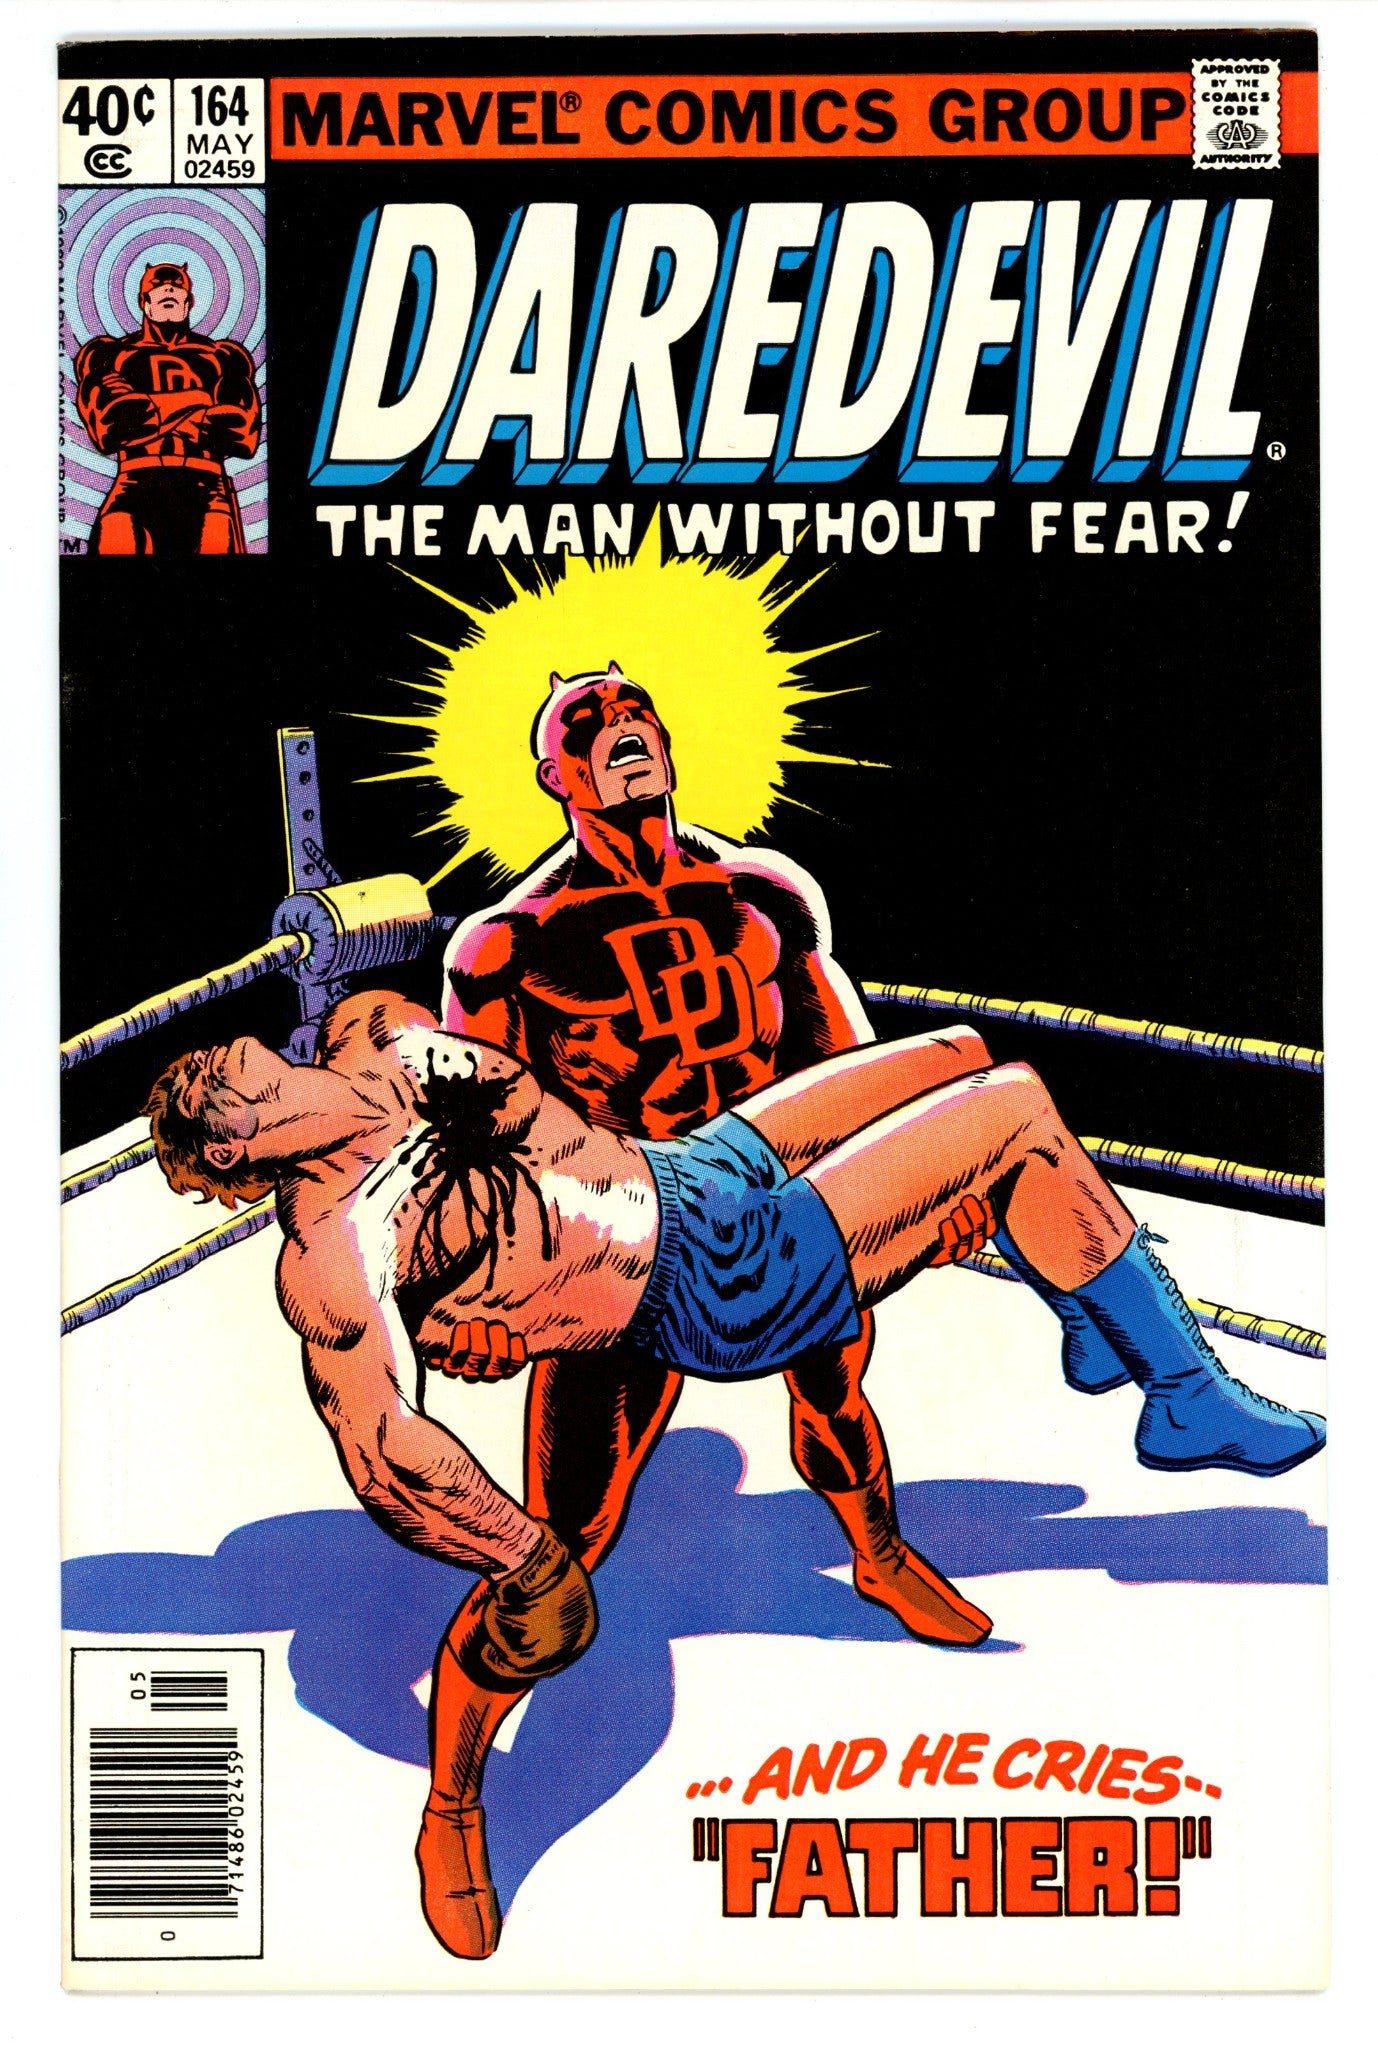 Daredevil Vol 1 164 VF (8.0) (1980) Newsstand 